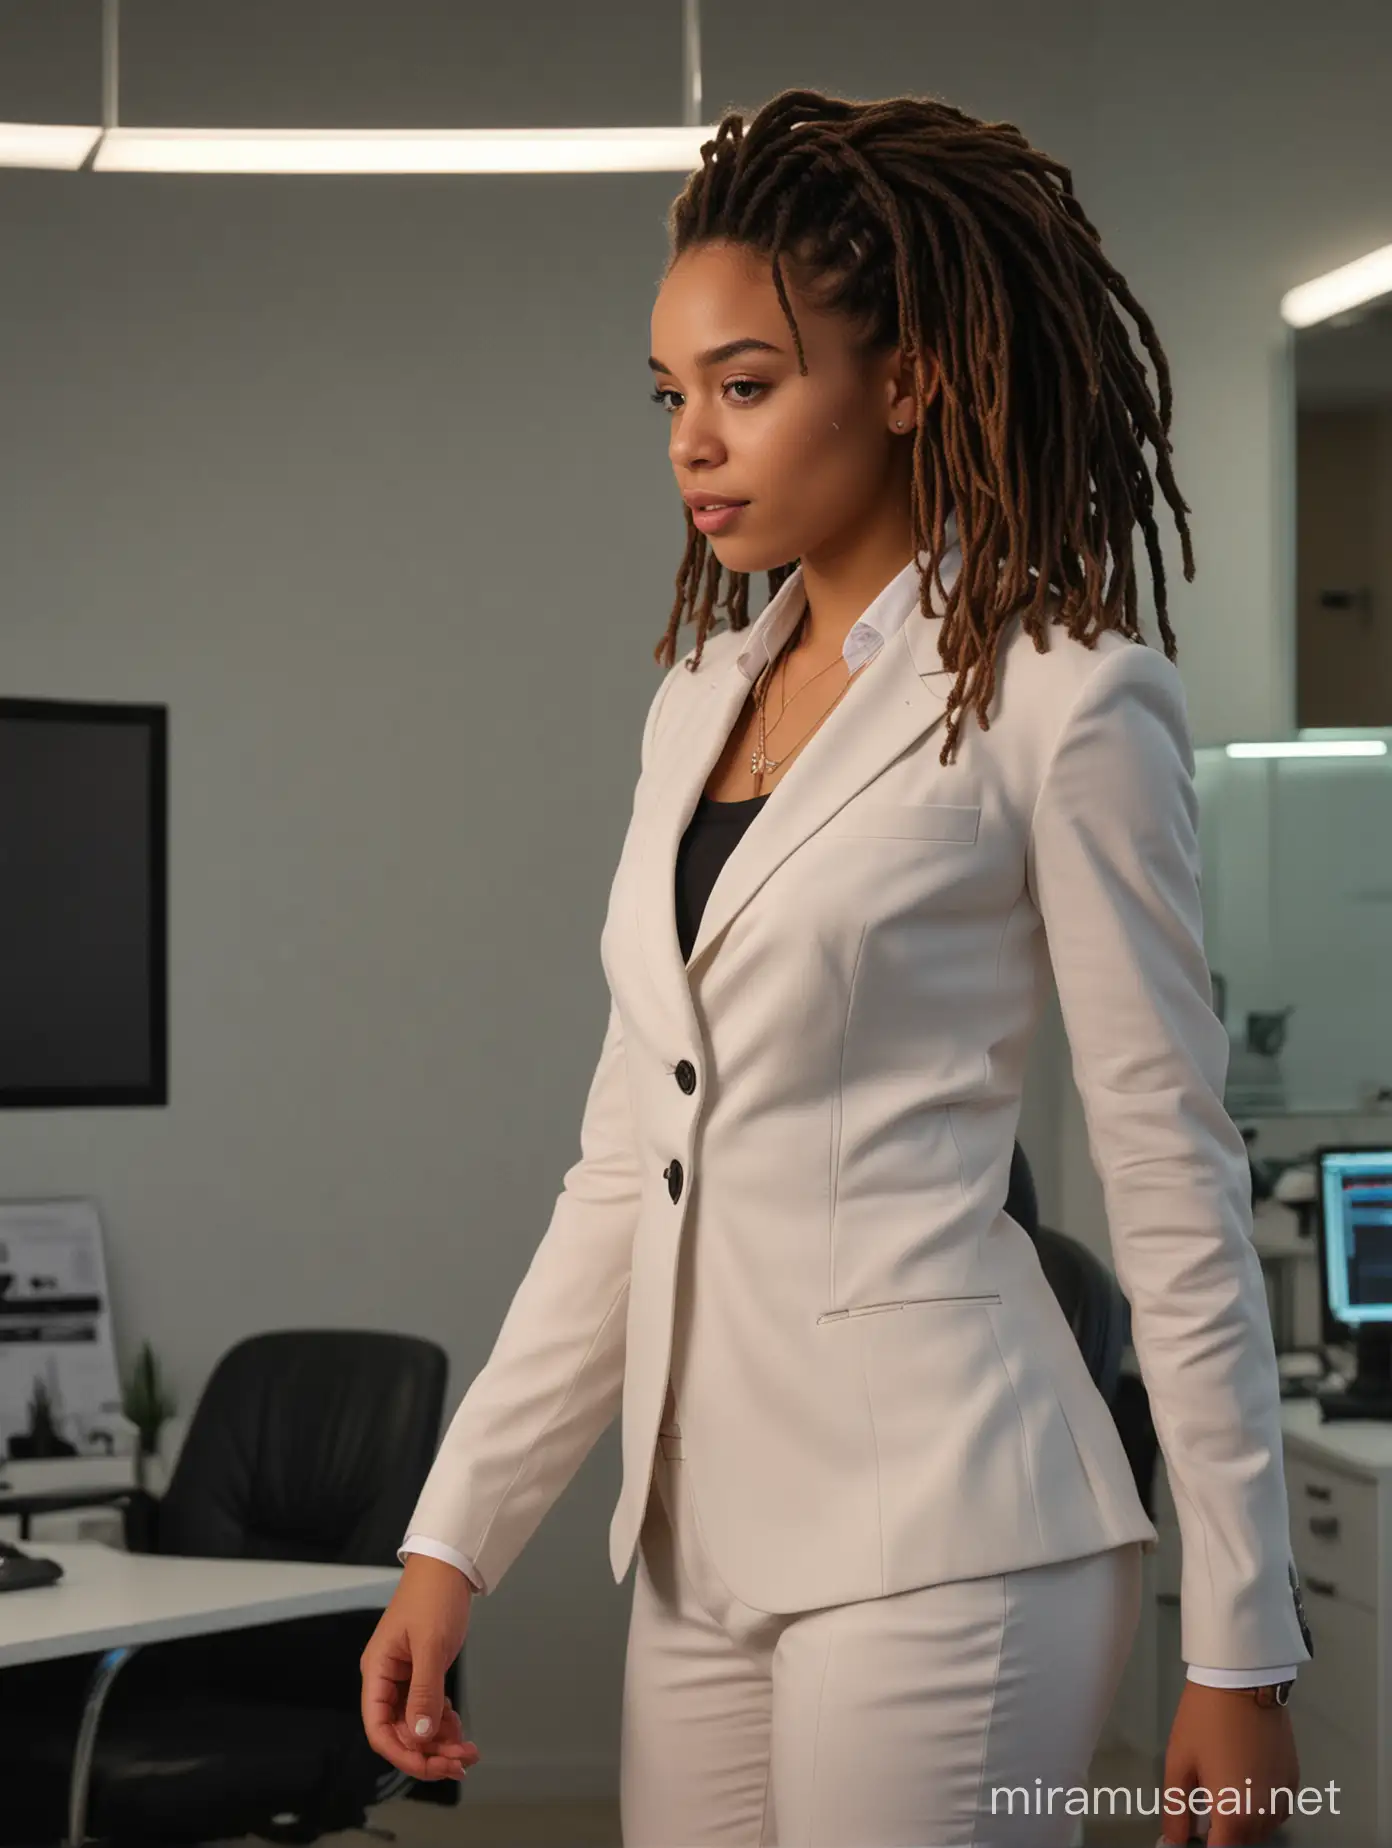 Glowing Caribbean Lightskin Woman with Intricate Dreadlocks in Professional Office Suit